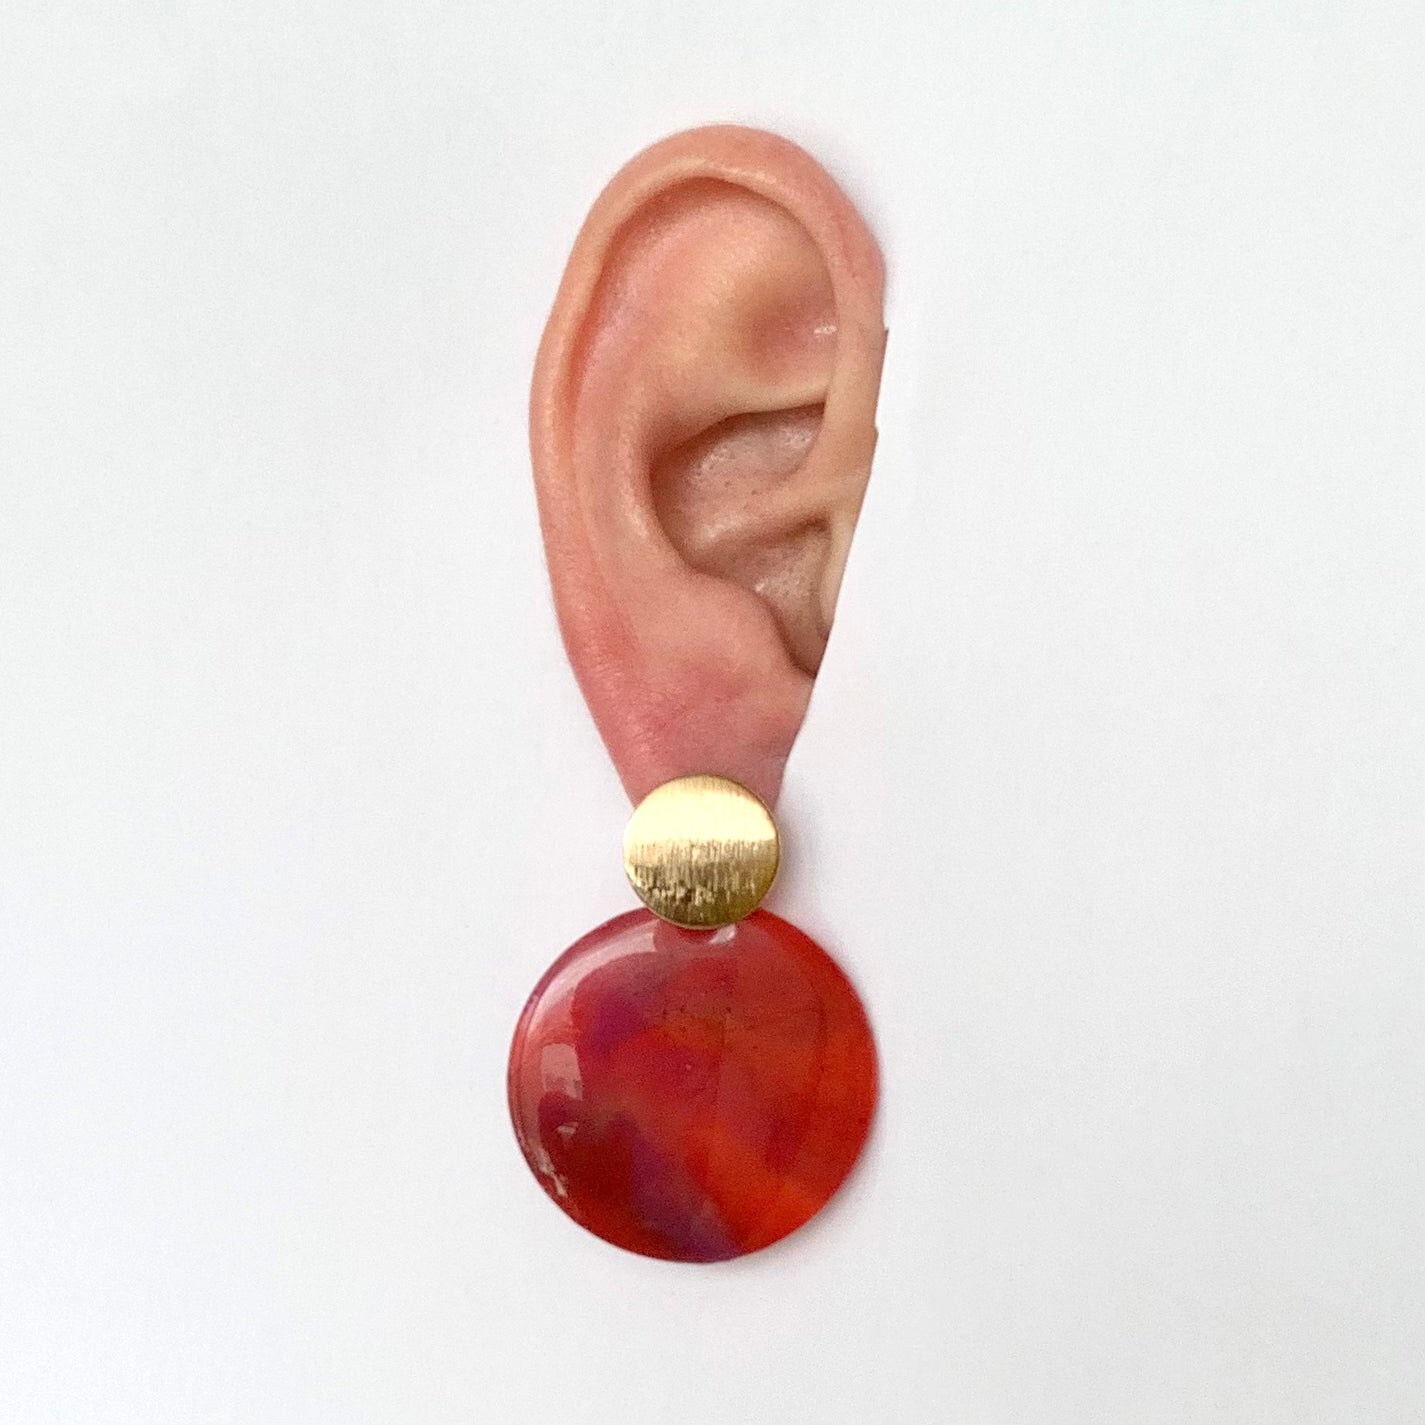 Red large studs recycled plastic handmade London earrings by Jagoda Jay Sudak Keshani